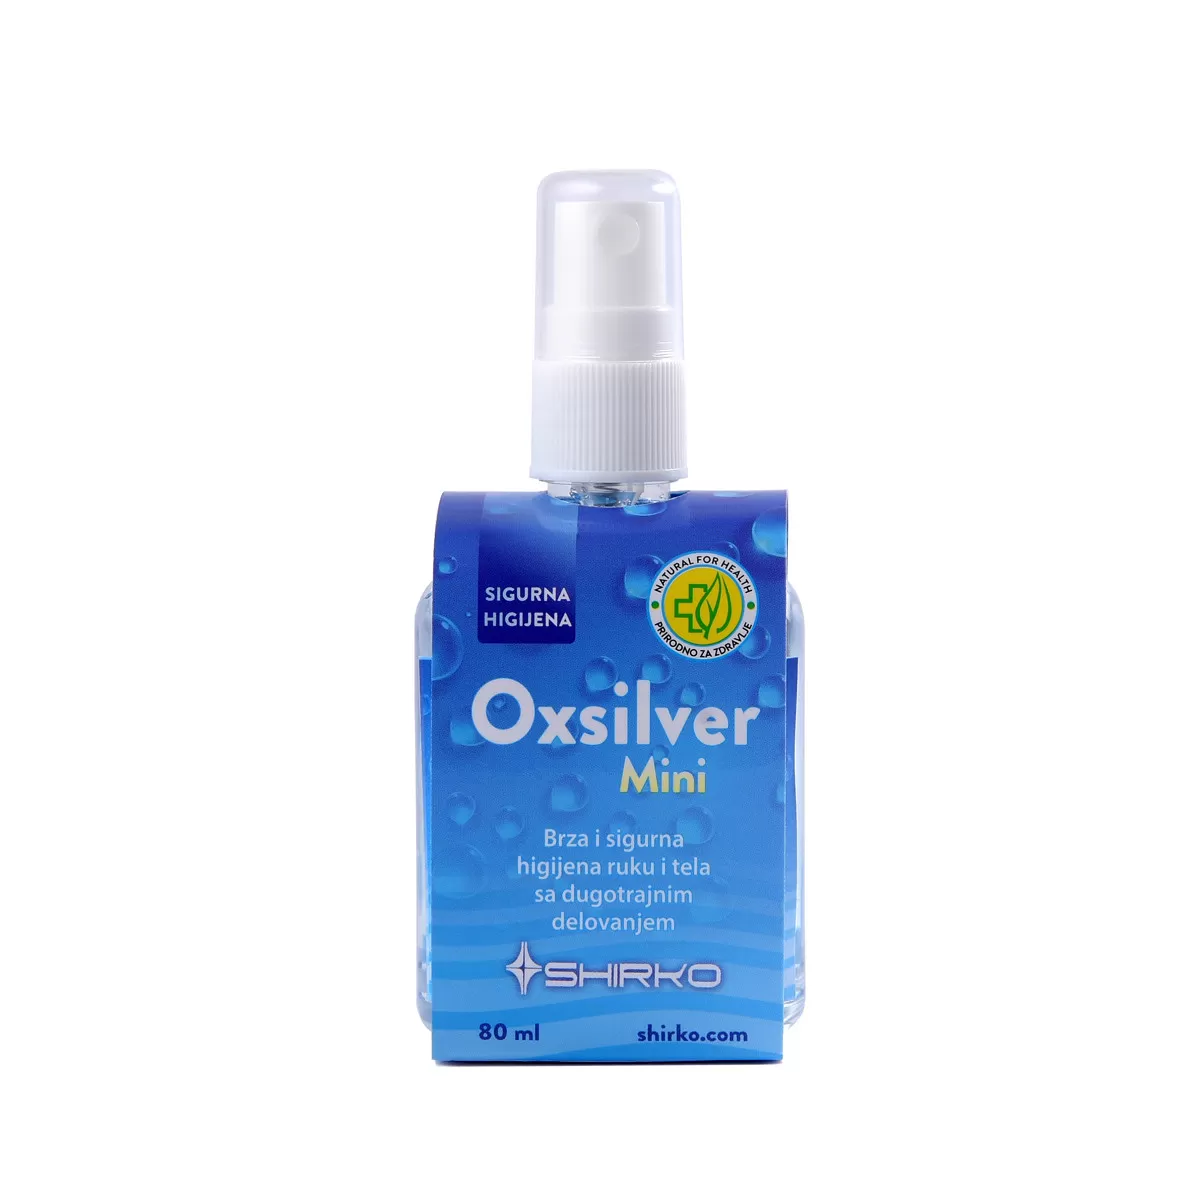 Oxsilver mini 80 ml 